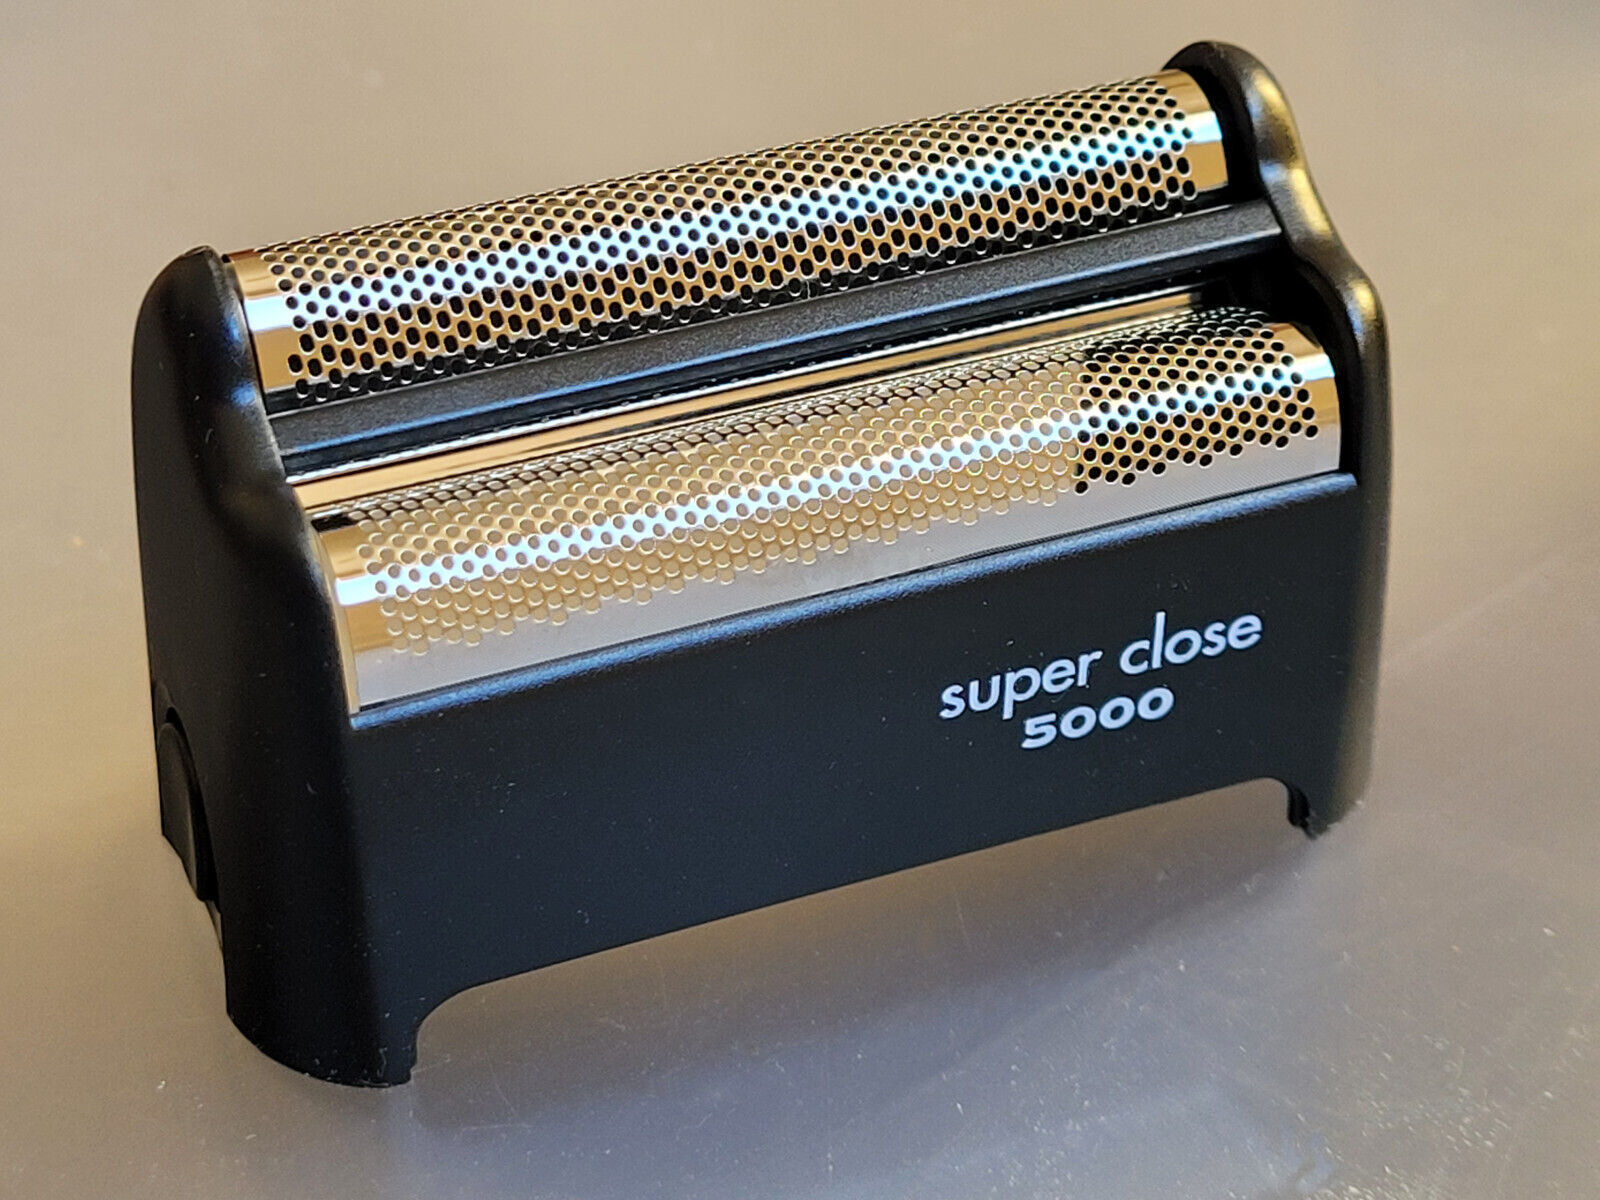 2 pack Wahl Shaver system 5000 super close replacement Foil - $19.78